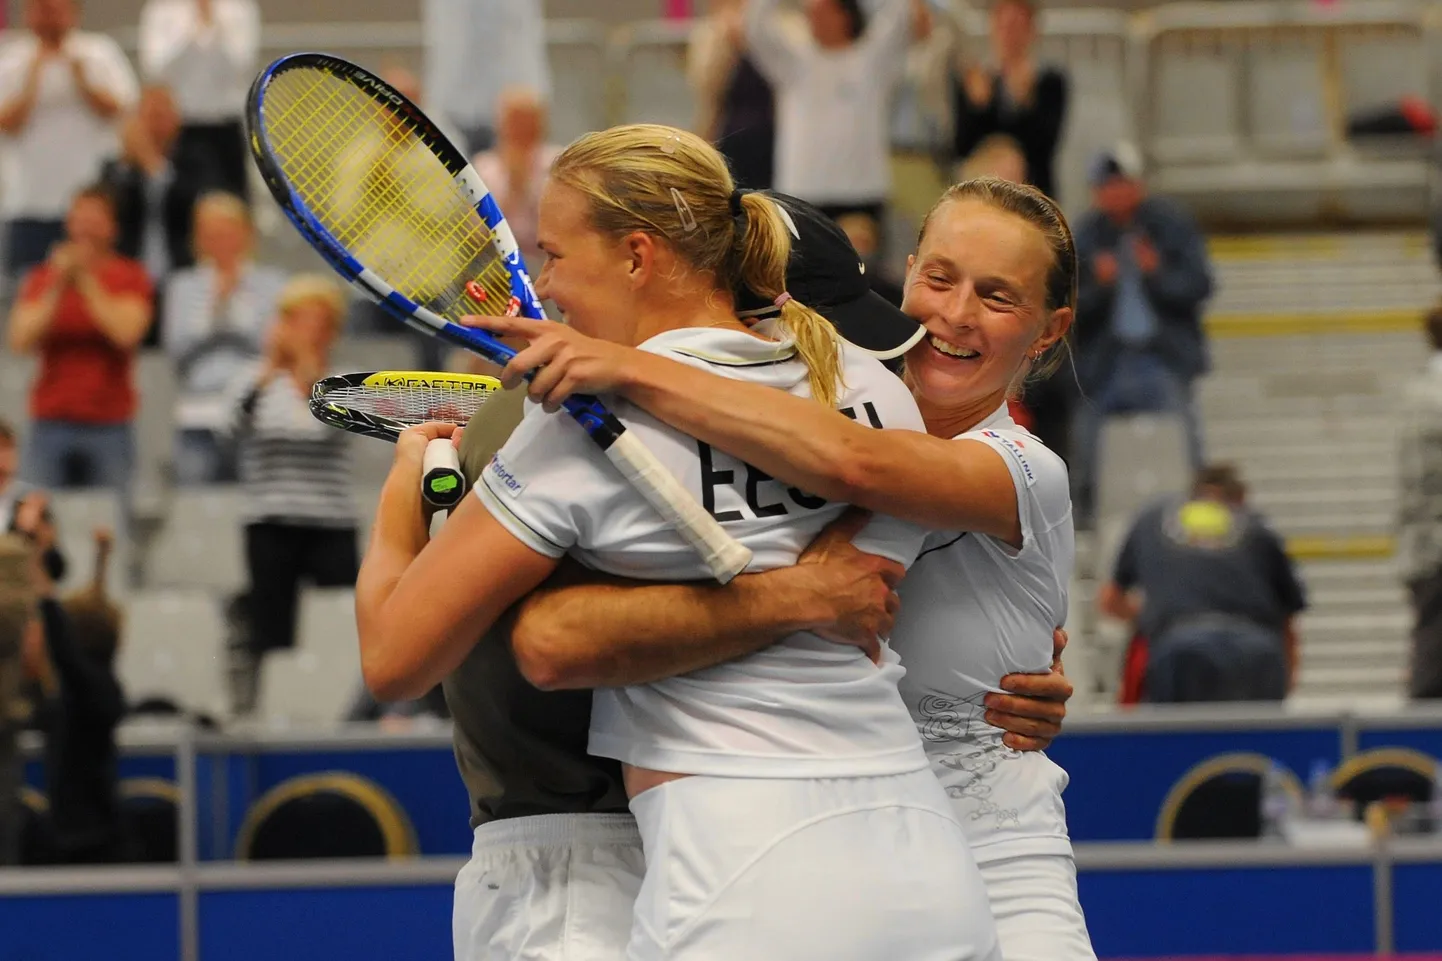 Eesti tennisepiigade Maret Ani (vasakul) ja Kaia Kanepi rõõmu jagab naiskonna treener Rene Busch.